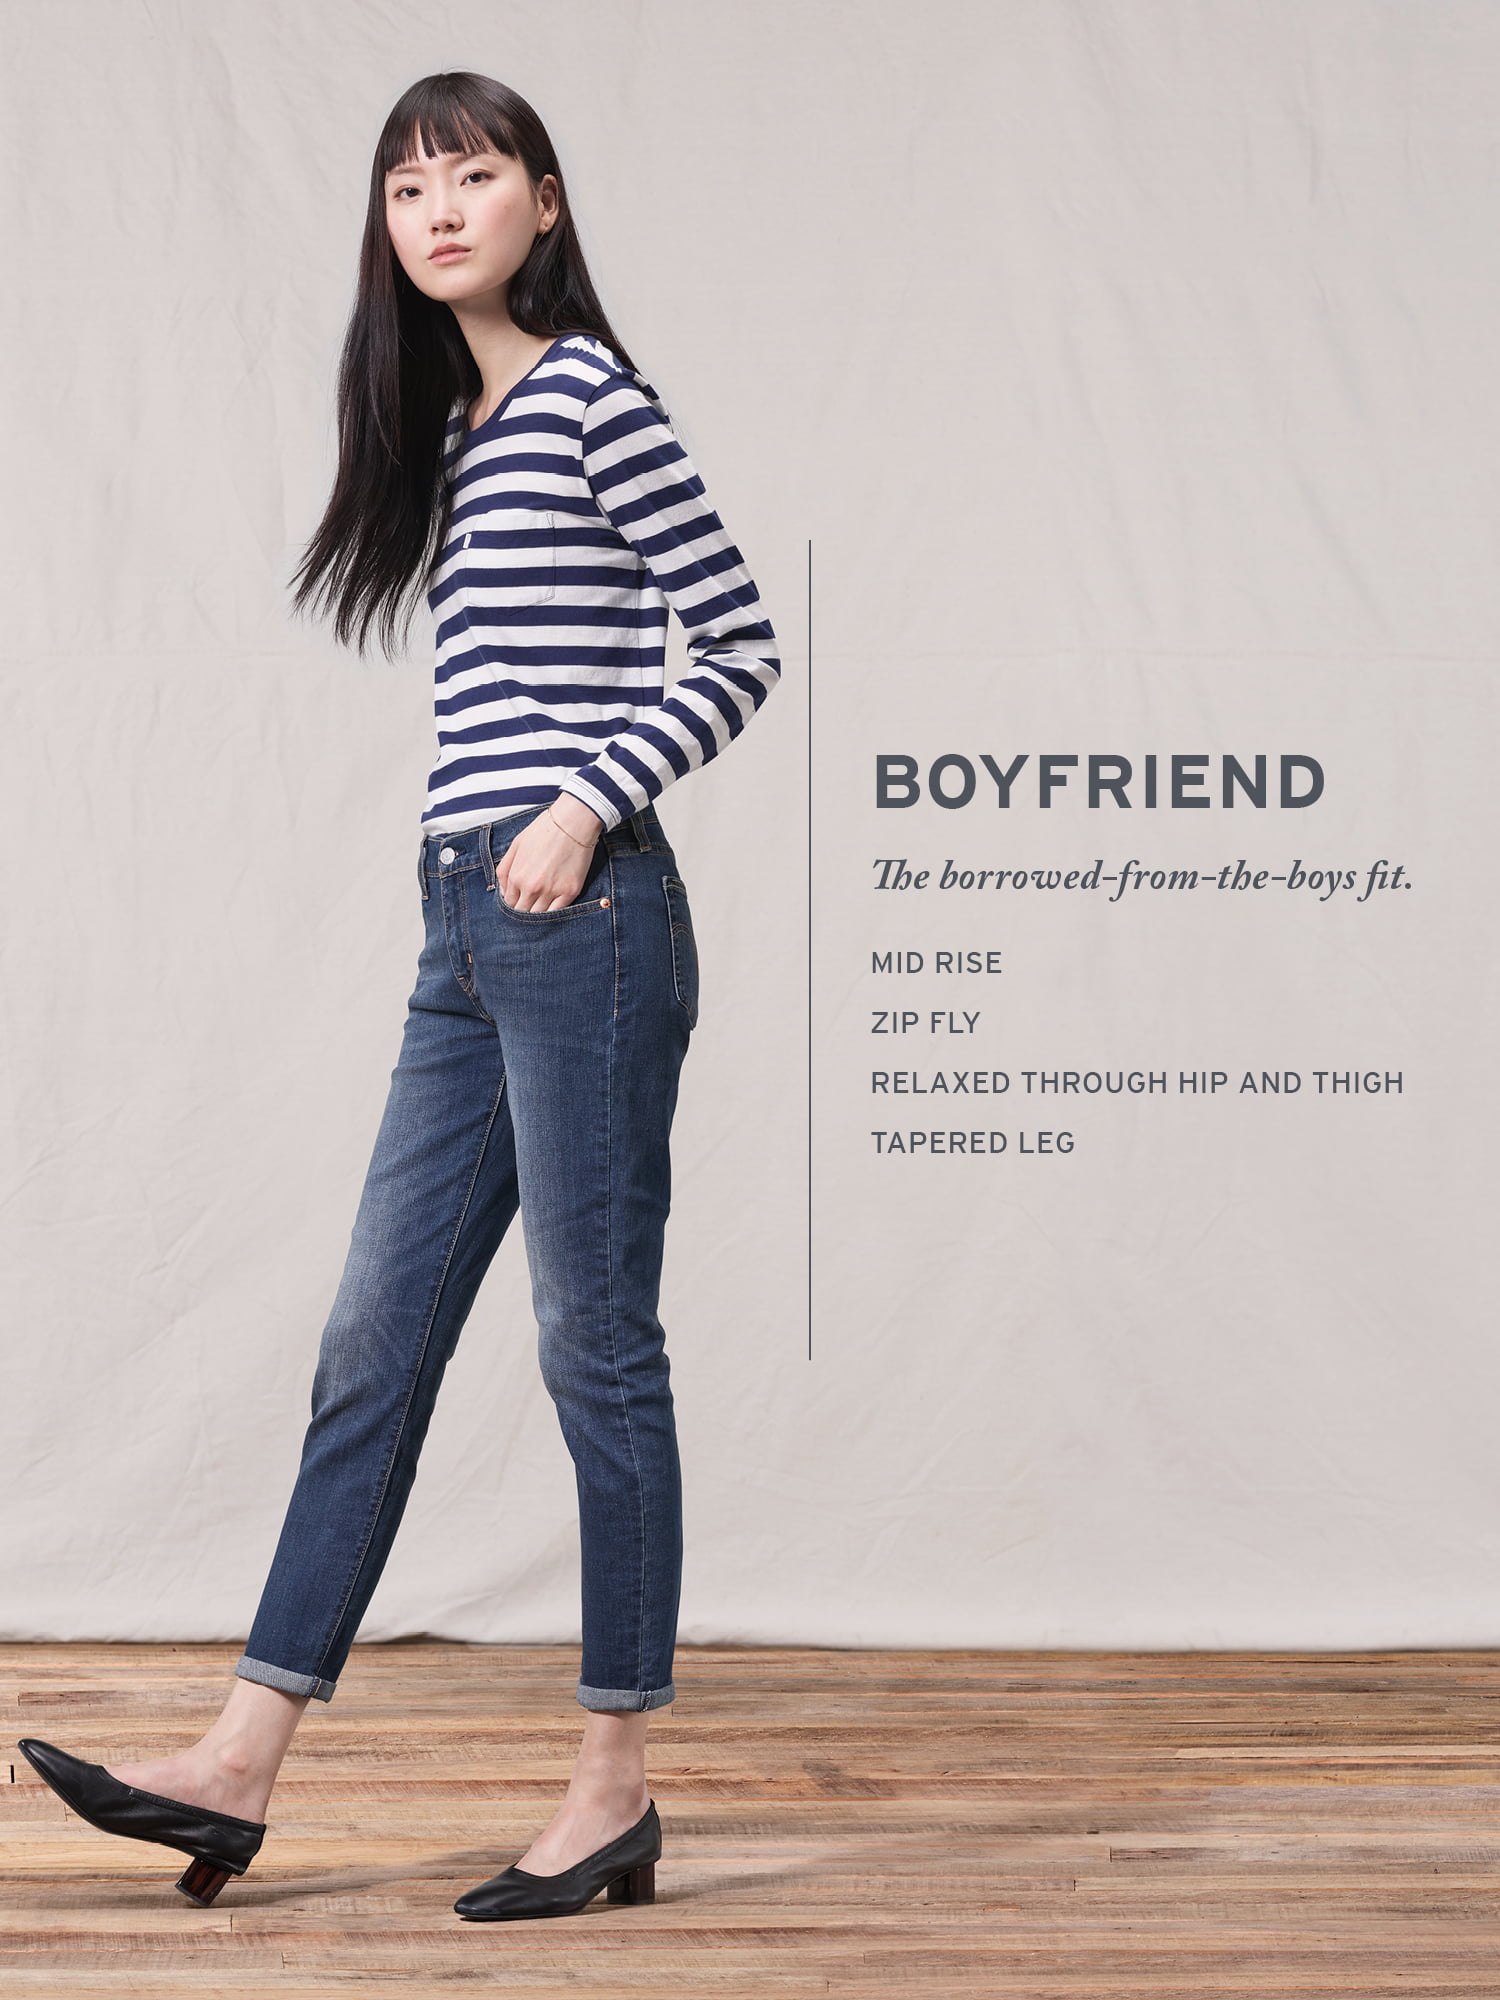 Levi's Women's New Boyfriend Jeans - Walmart.com